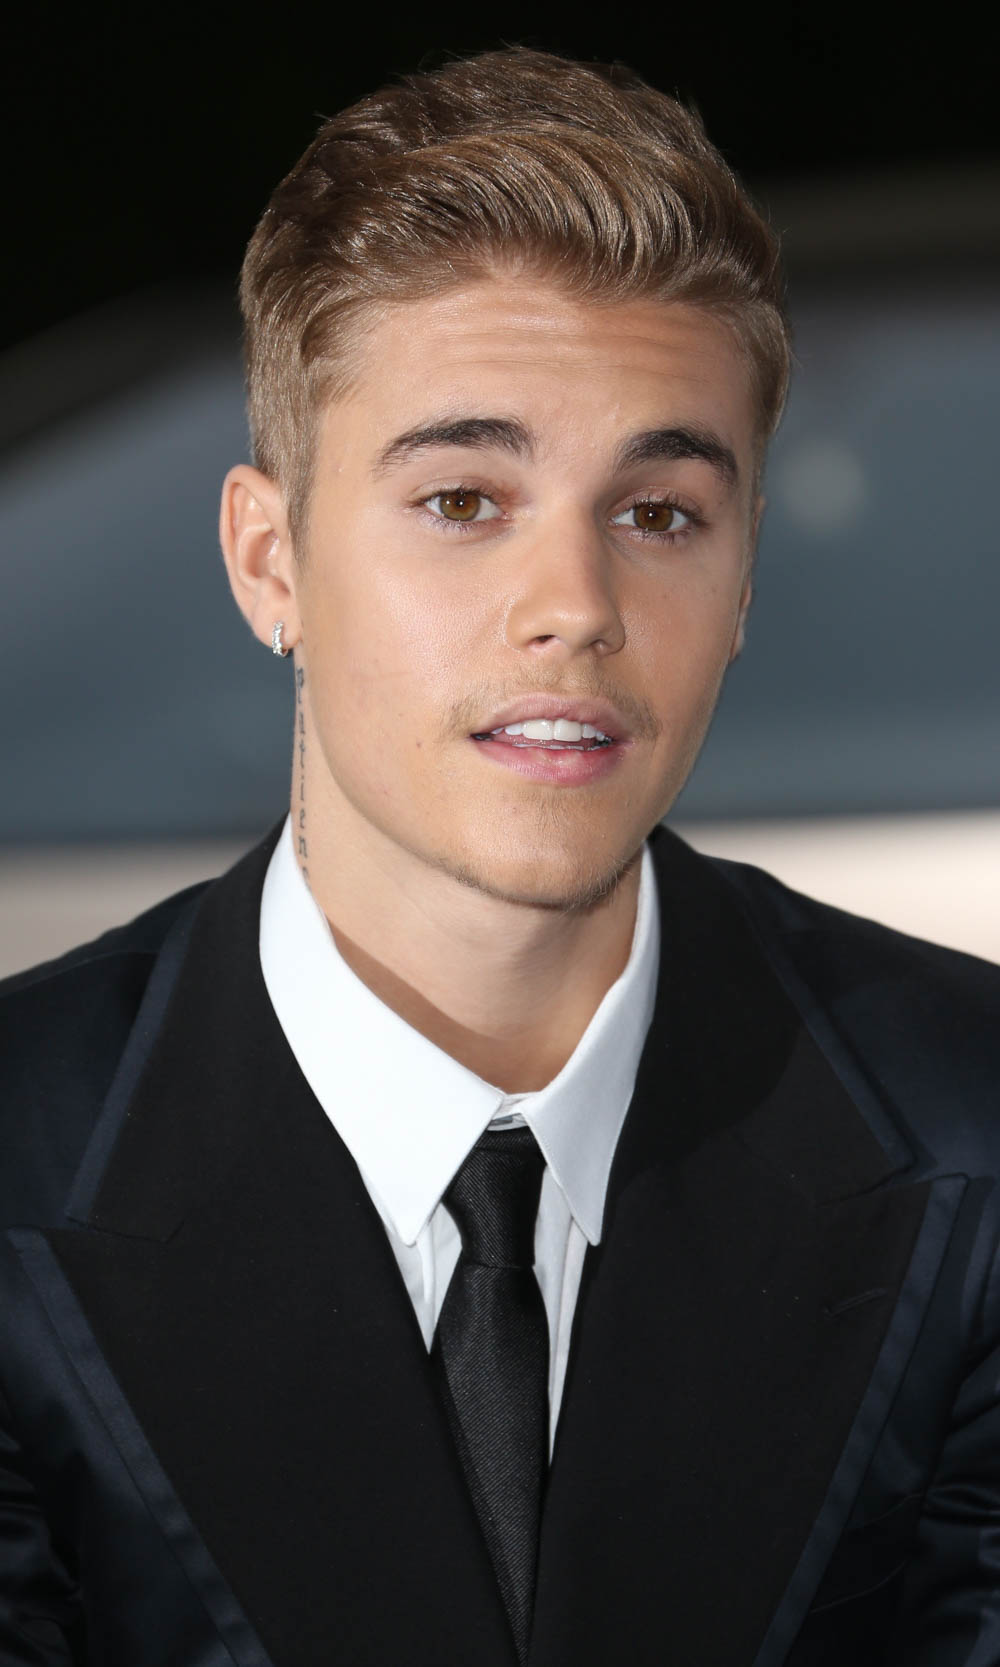 Justin Bieber's hair sells for $40,668 on eBay - CBS News